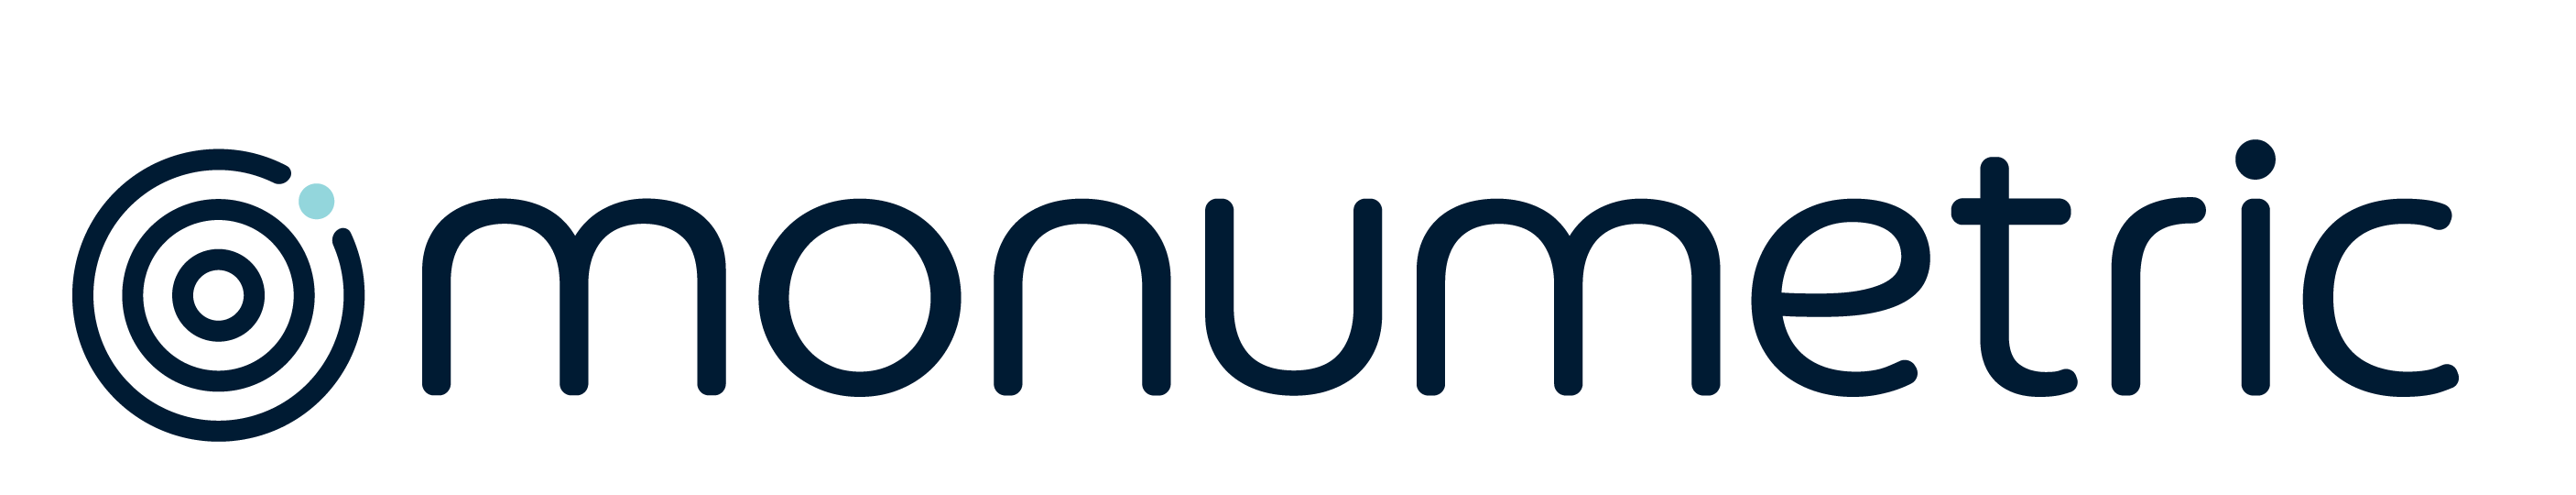 monumetric-logo